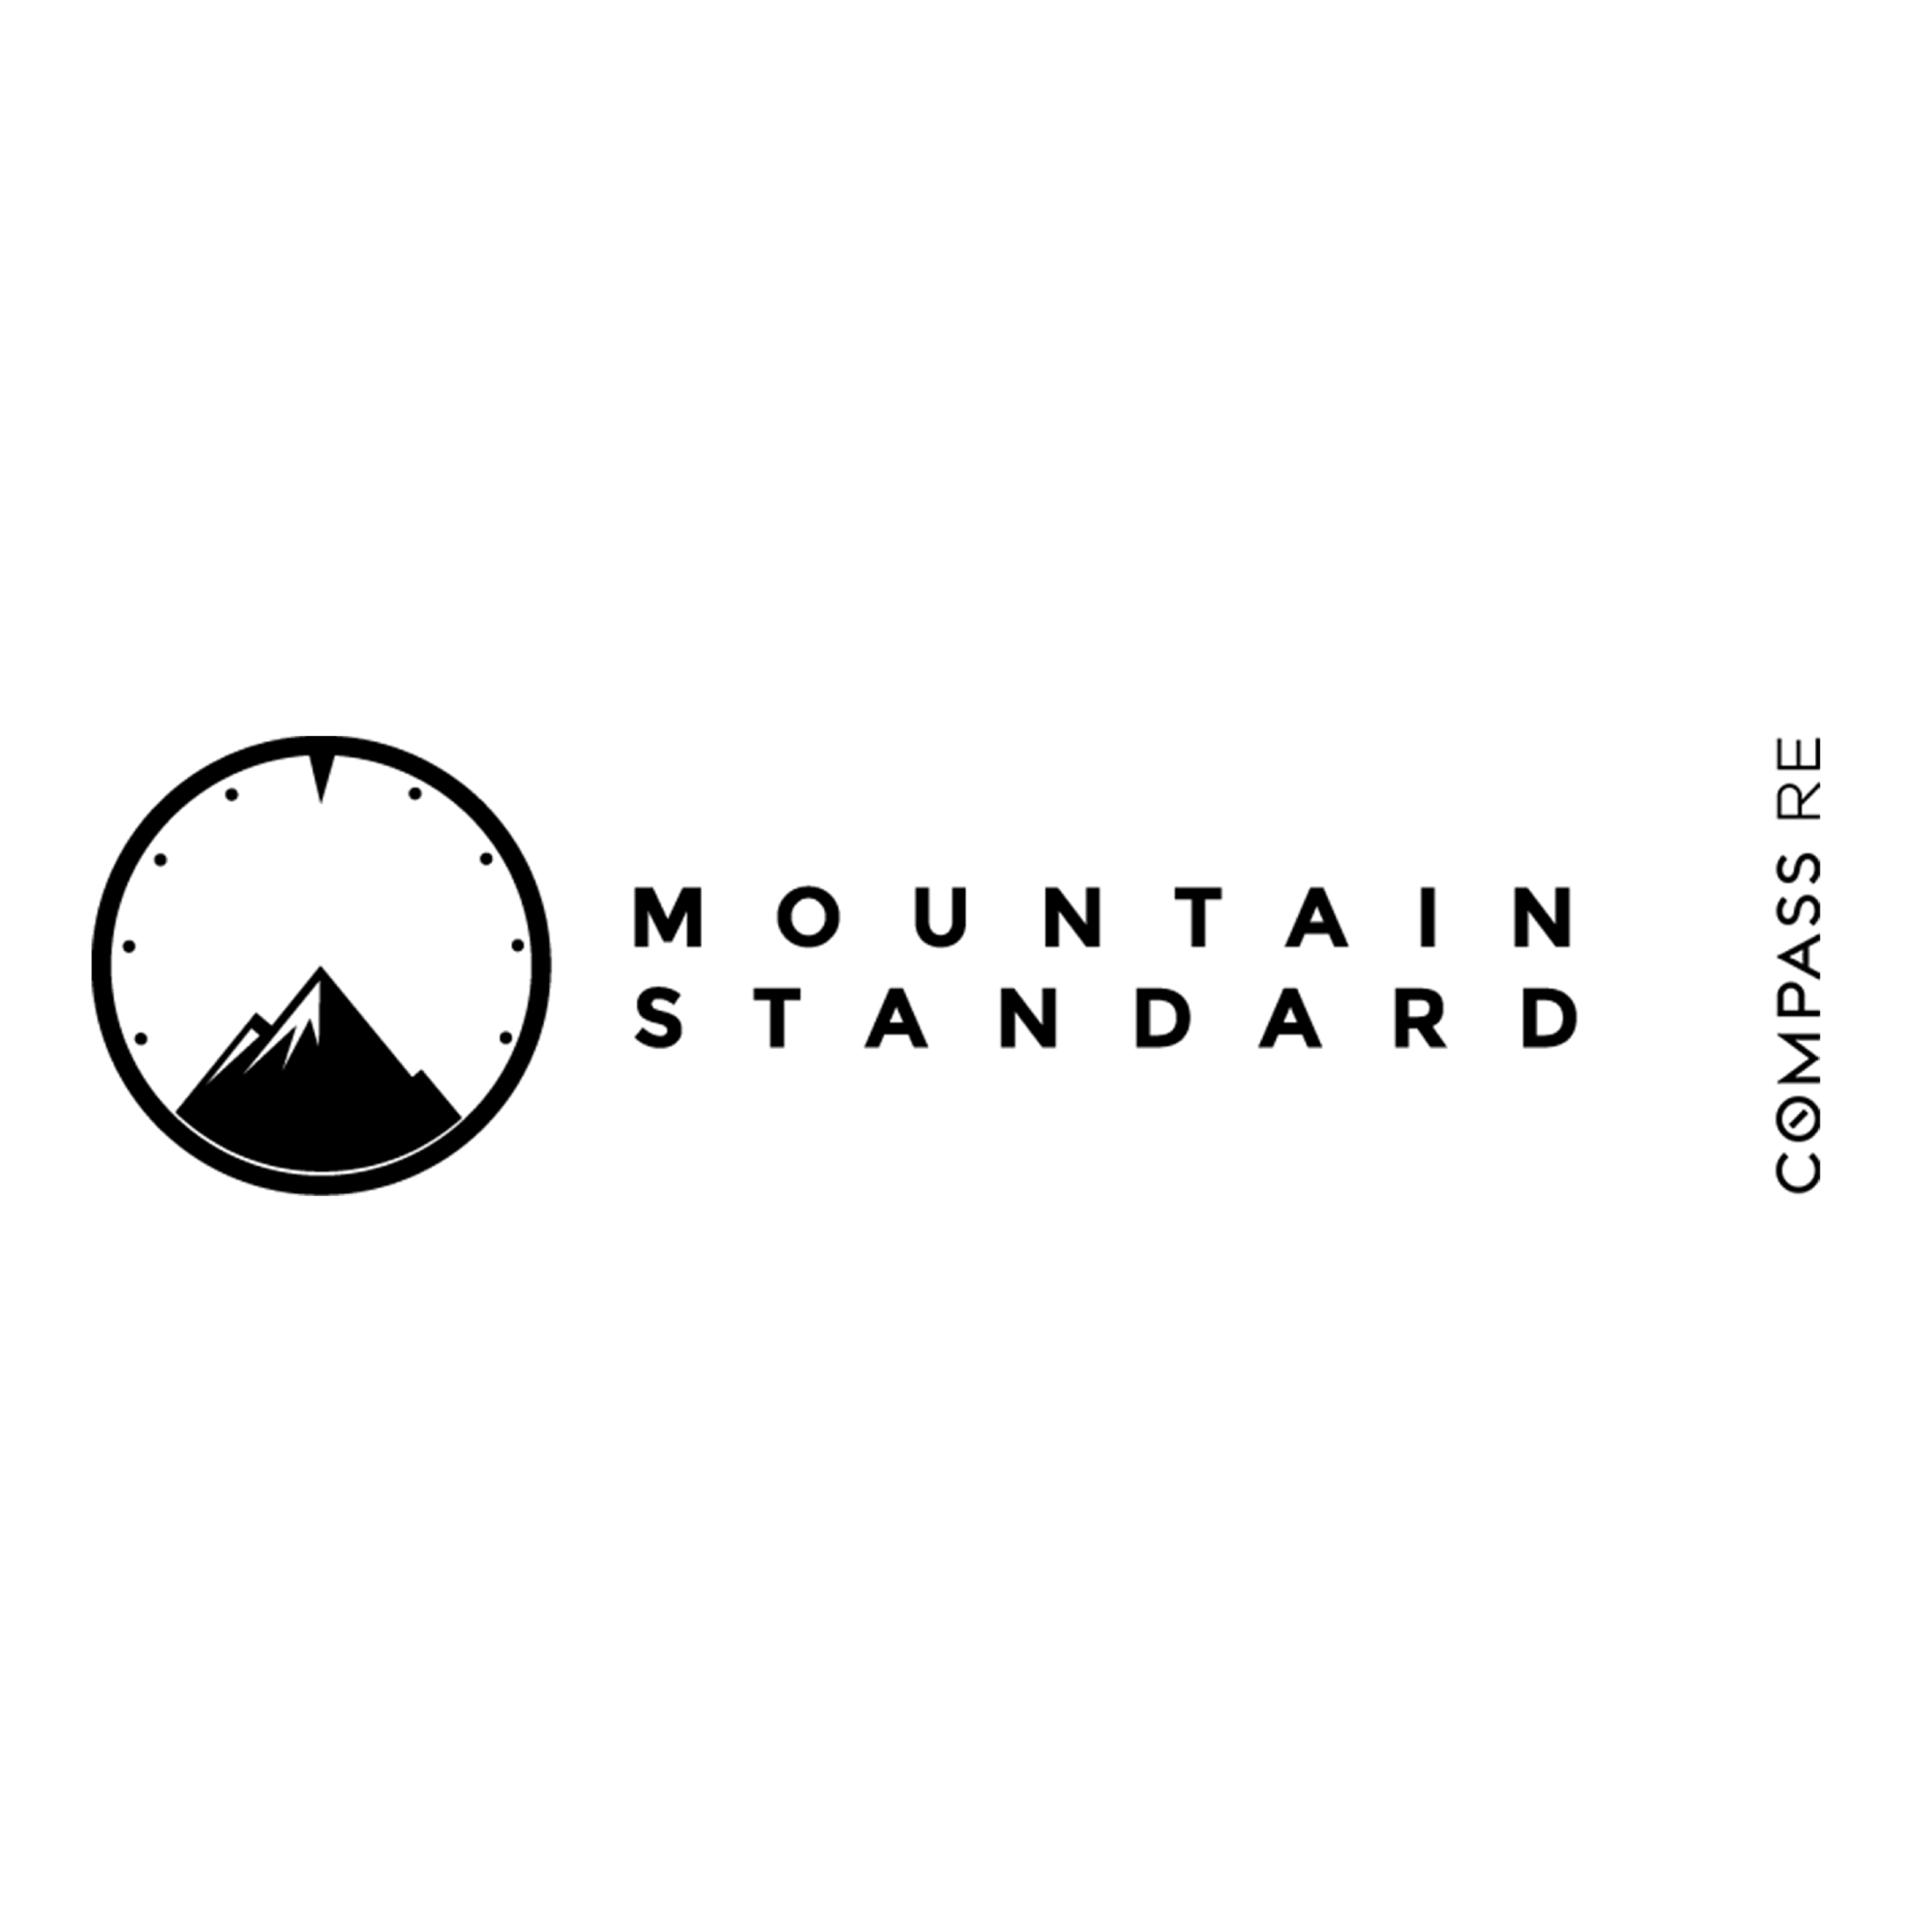 Mountain Standard logo